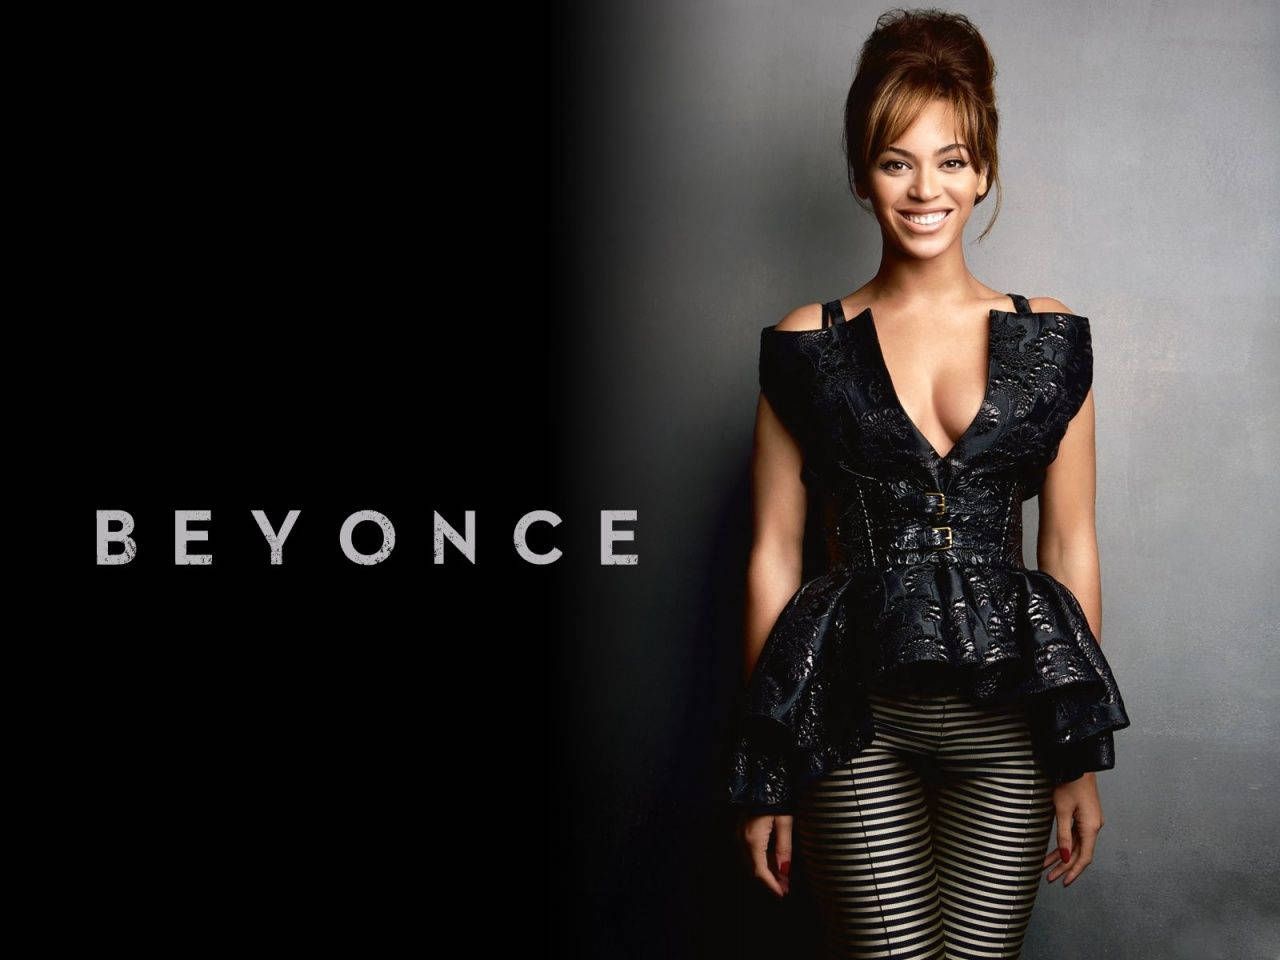 Free Beyonce Wallpaper Downloads, [100+] Beyonce Wallpapers for FREE |  